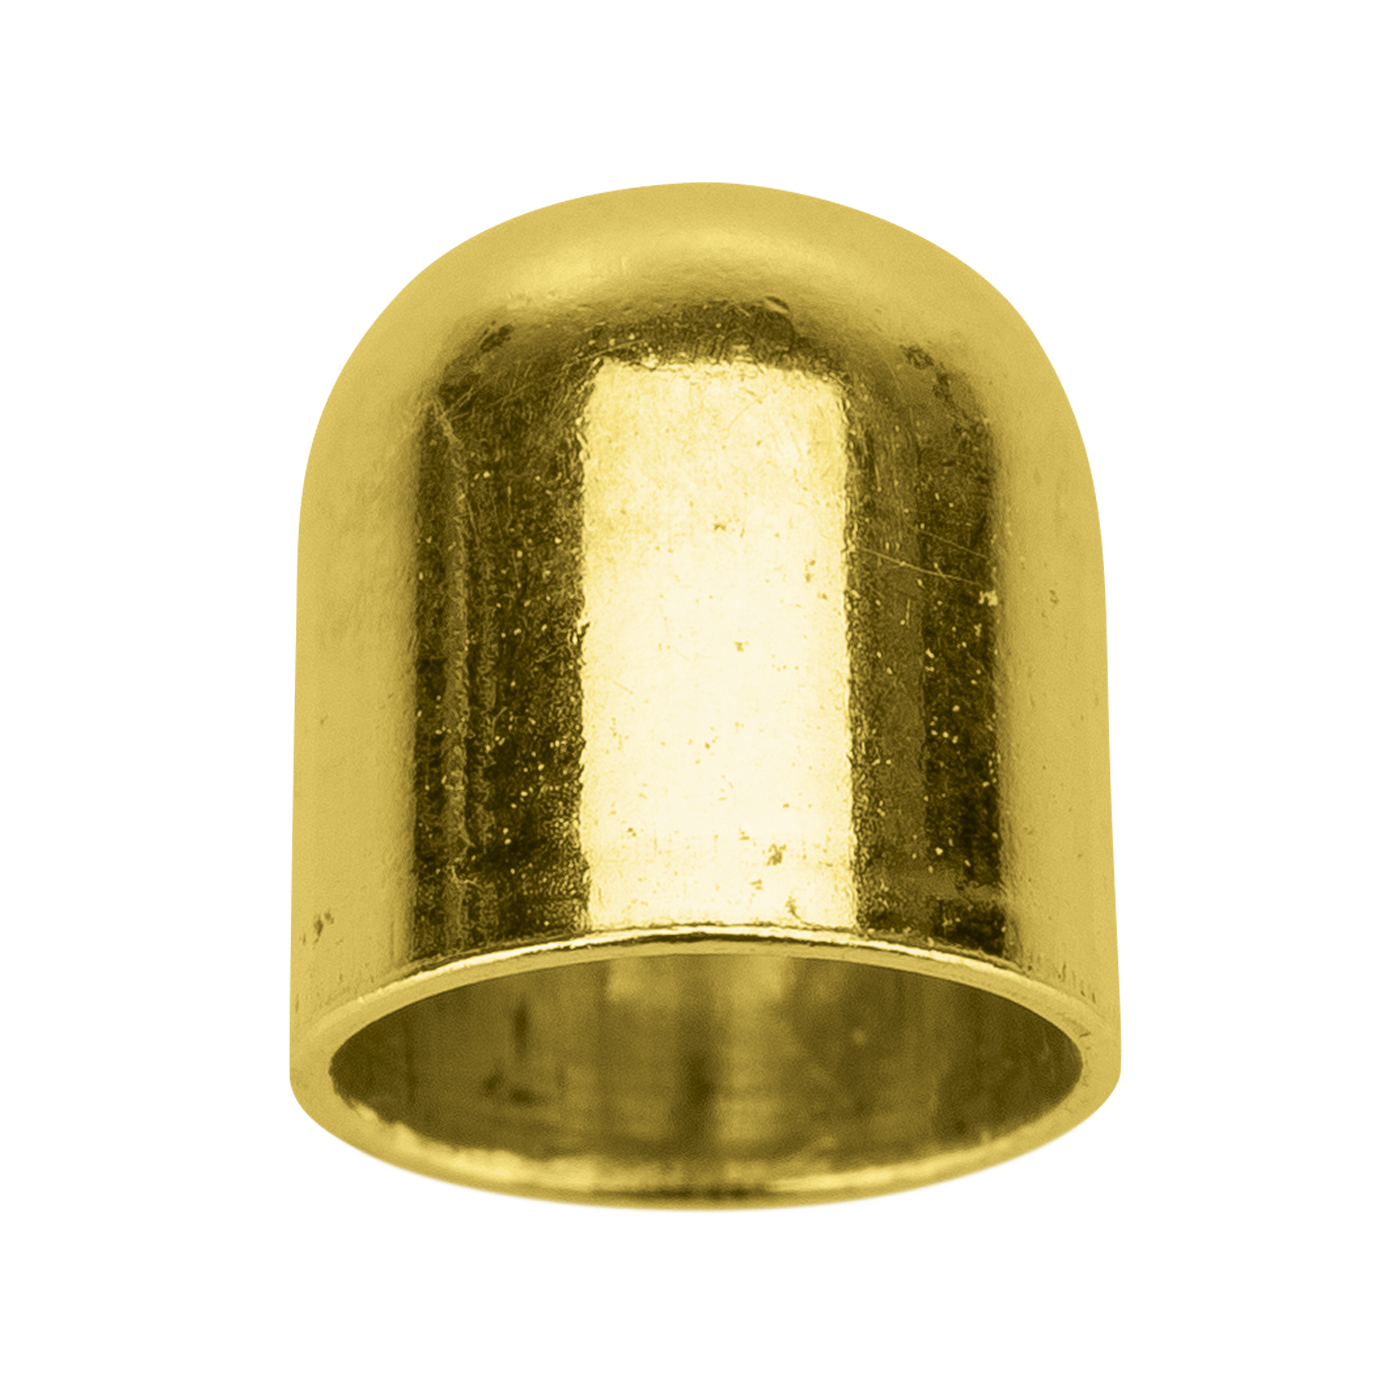 Endkappe, 925 Ag vergoldet, ø 4,1 mm, ohne Öse - 1 Stück